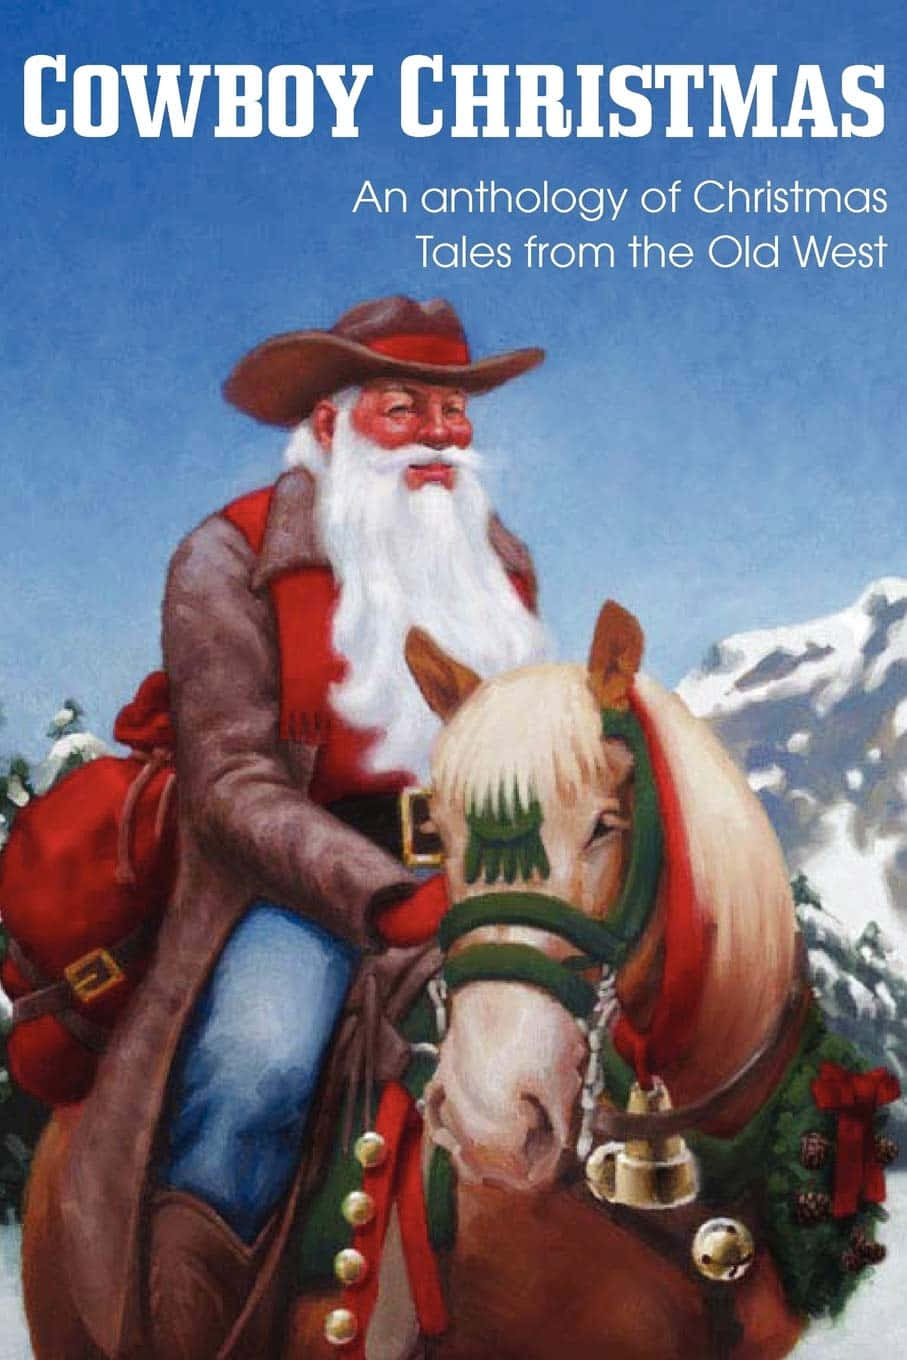 "Happy Cowboy Christmas!" Wallpaper